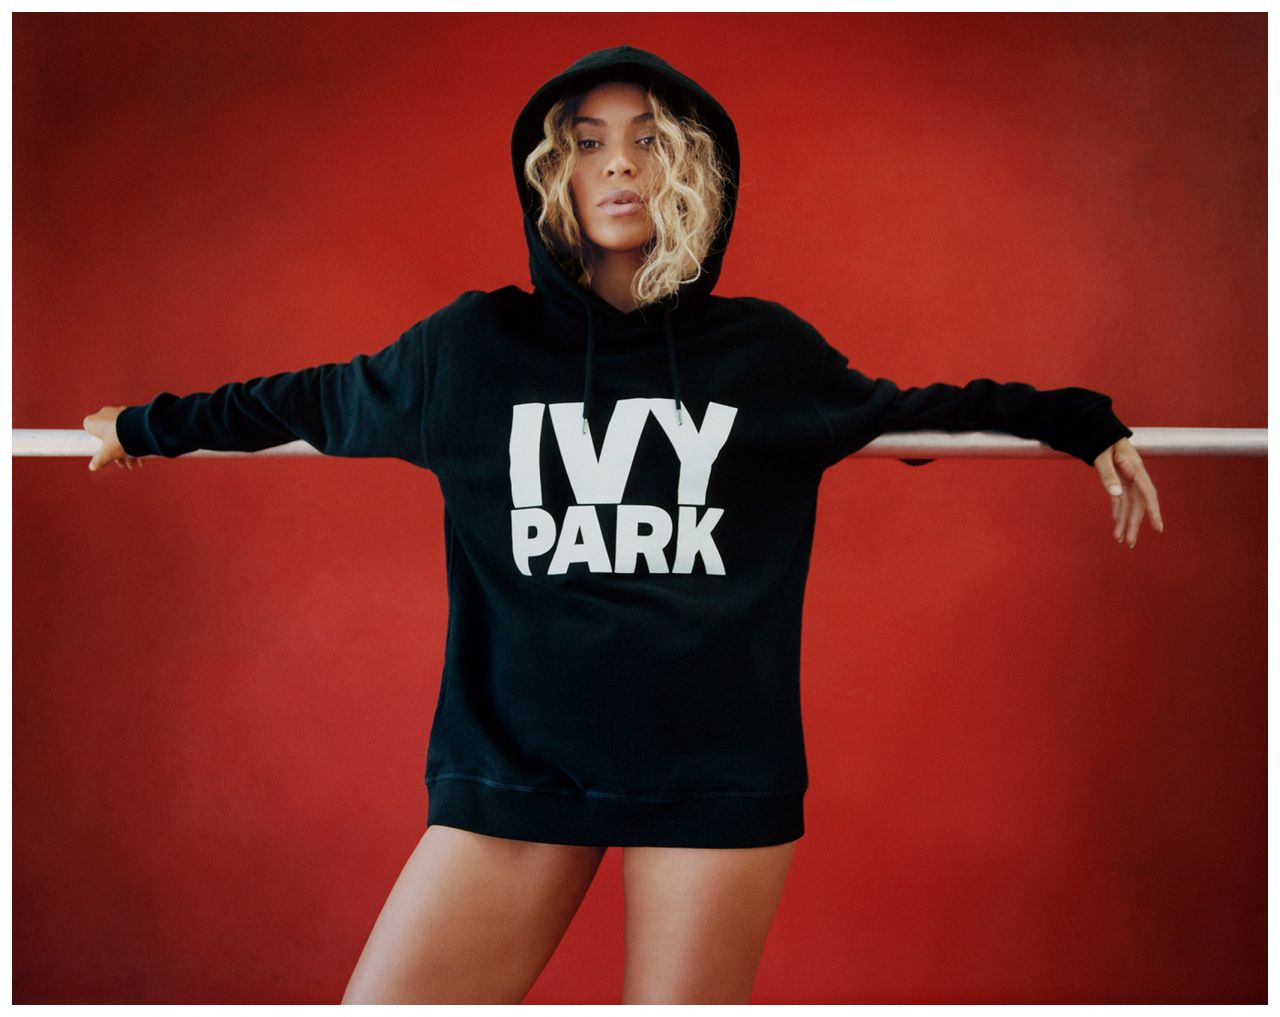 Beyonce - Ivy Park Autumn/Winter 2016-2017 Collection1280 x 1017